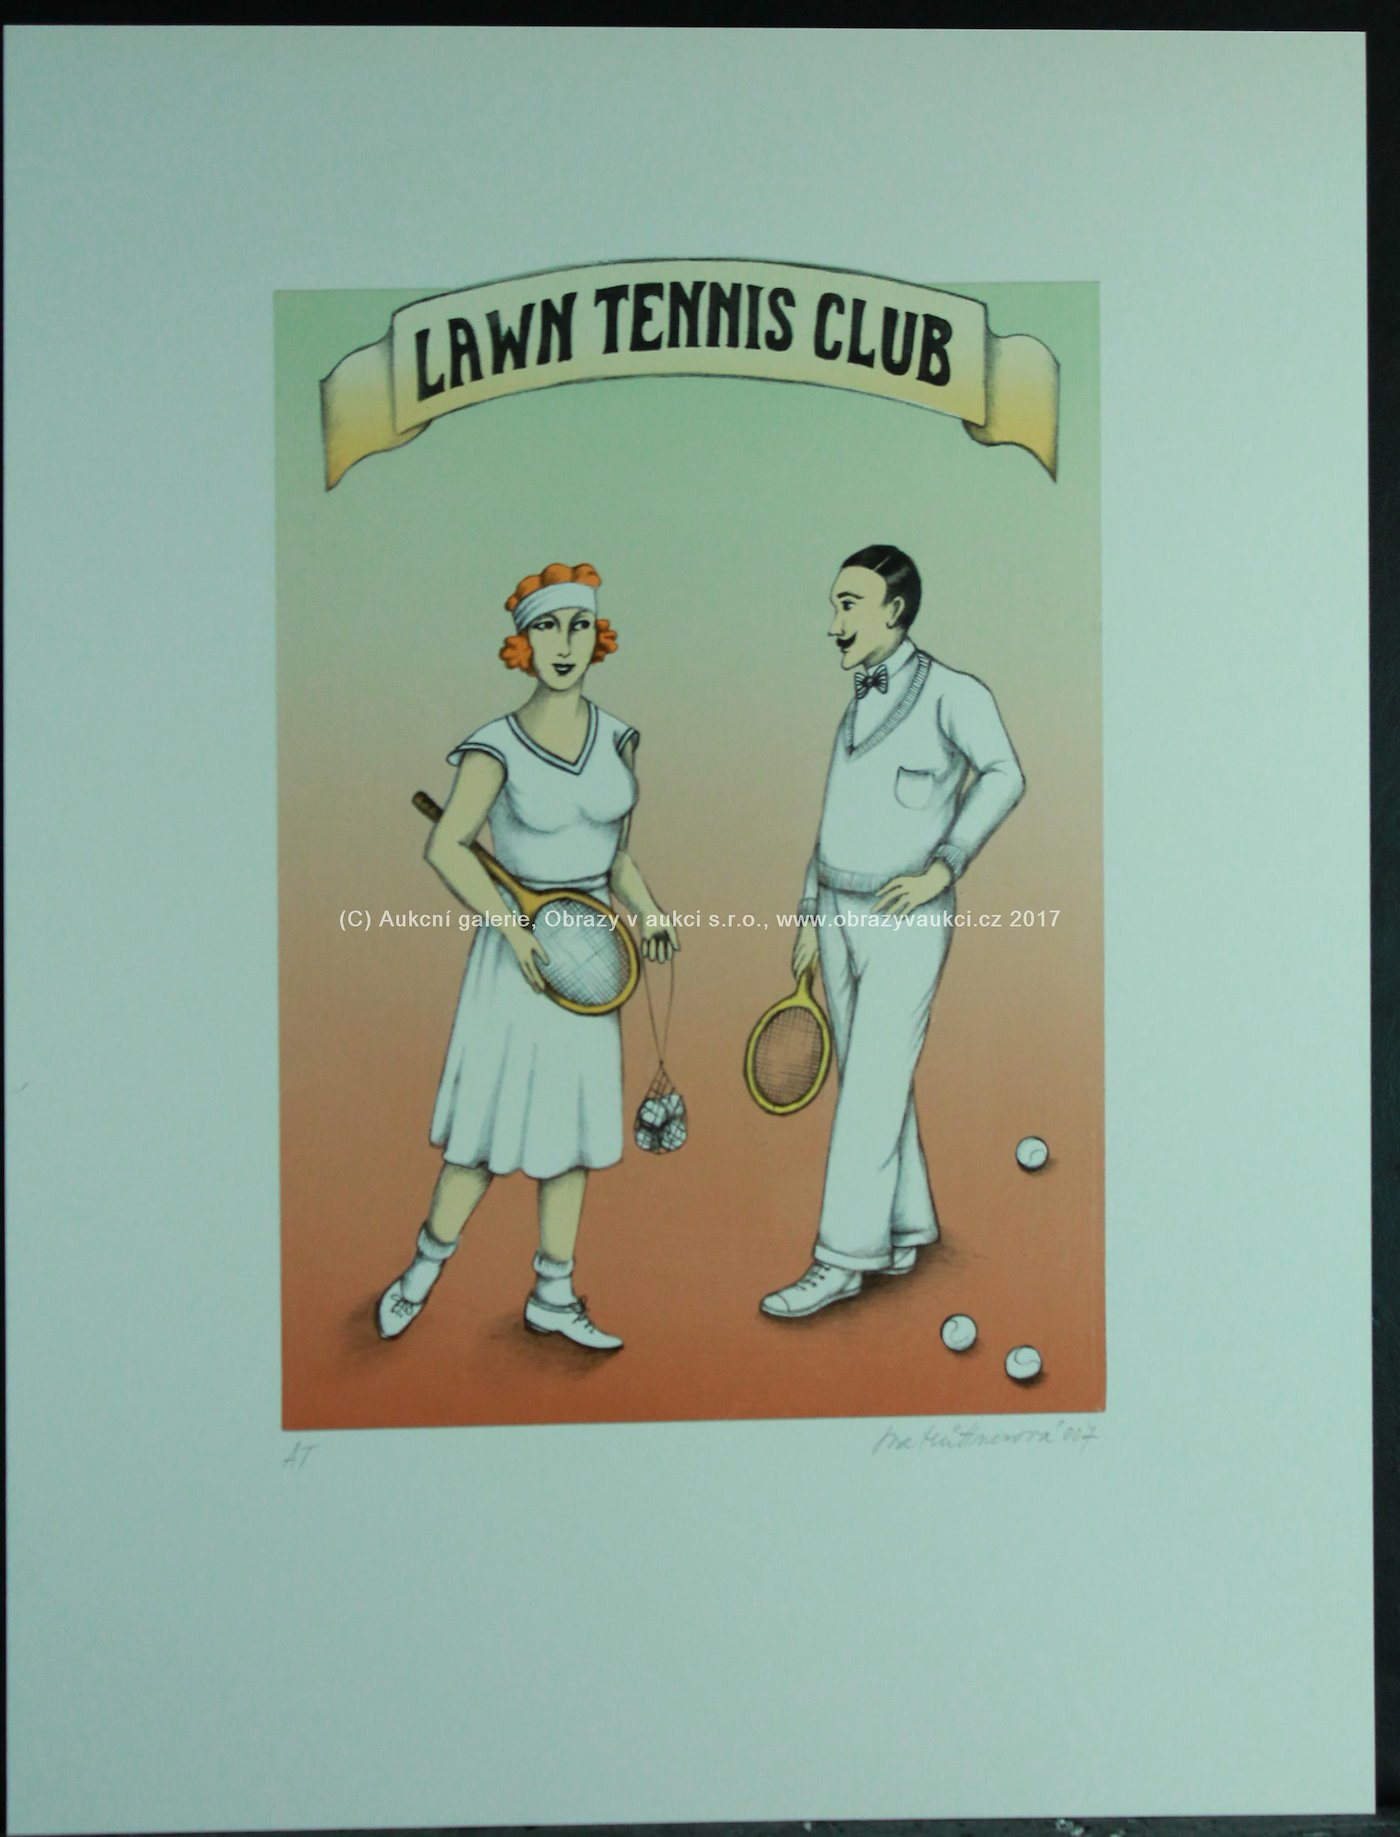 Iva Hüttnerová - Lawn tennis club